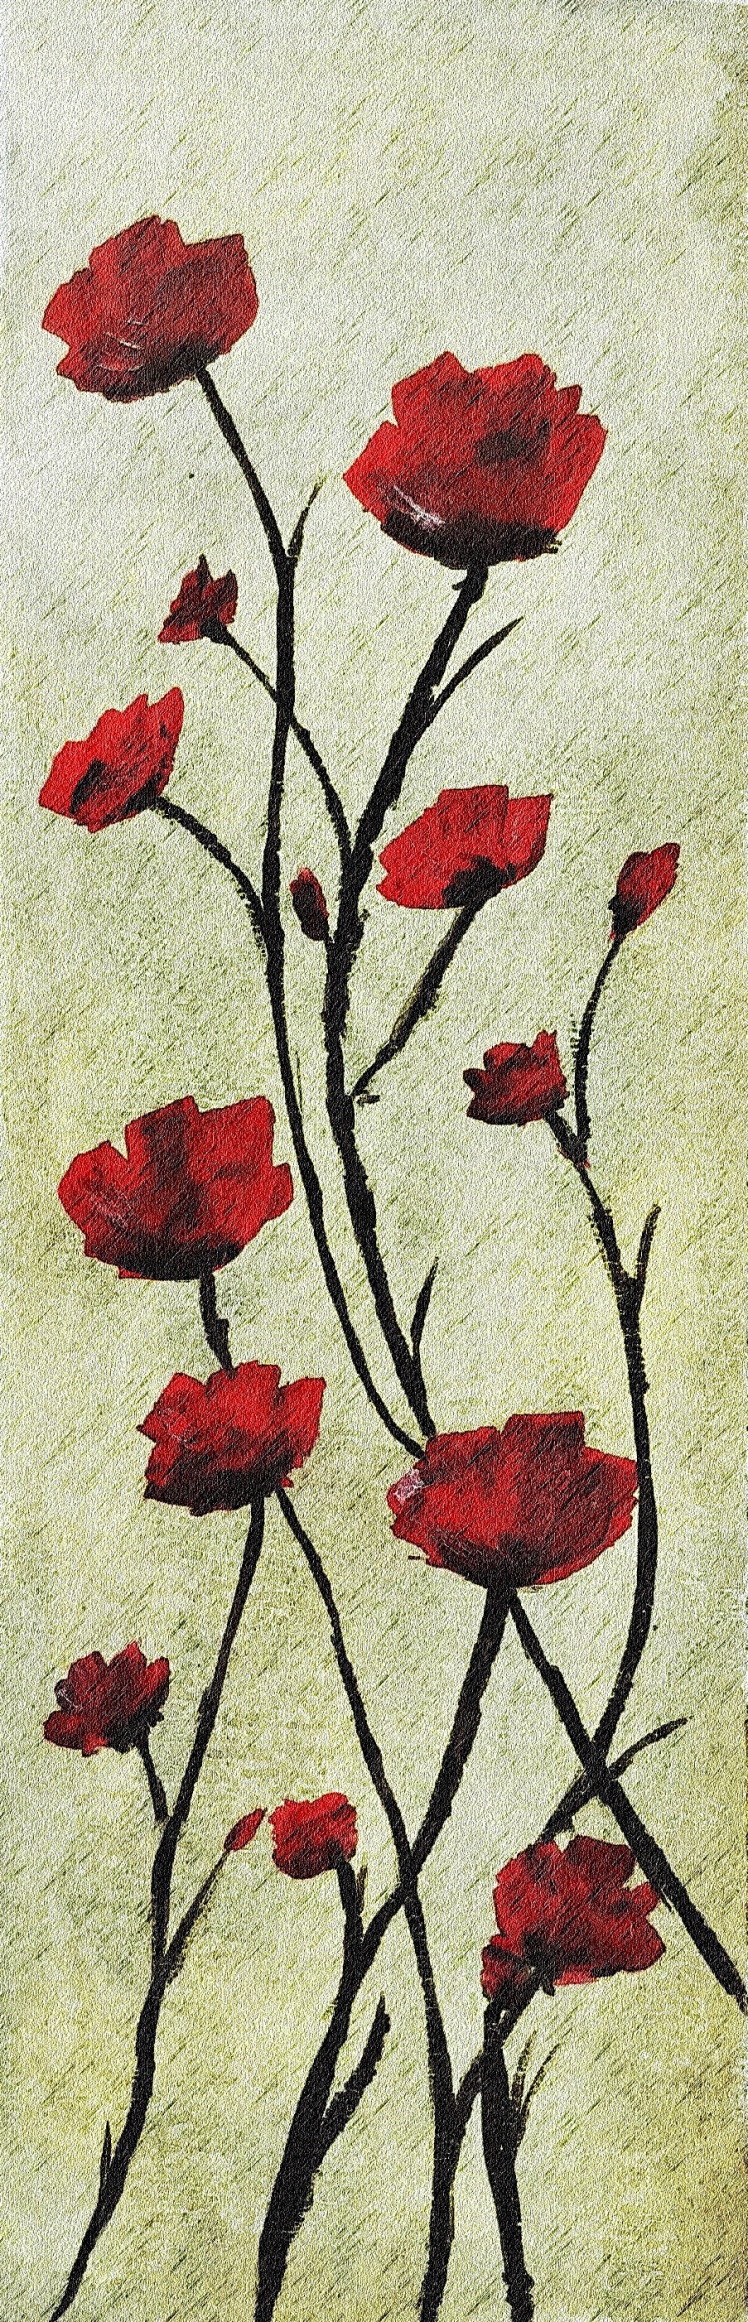 Snururi-rosii-impletite-Jurnal-Noiembrie-acrylic-my-painting-wp--